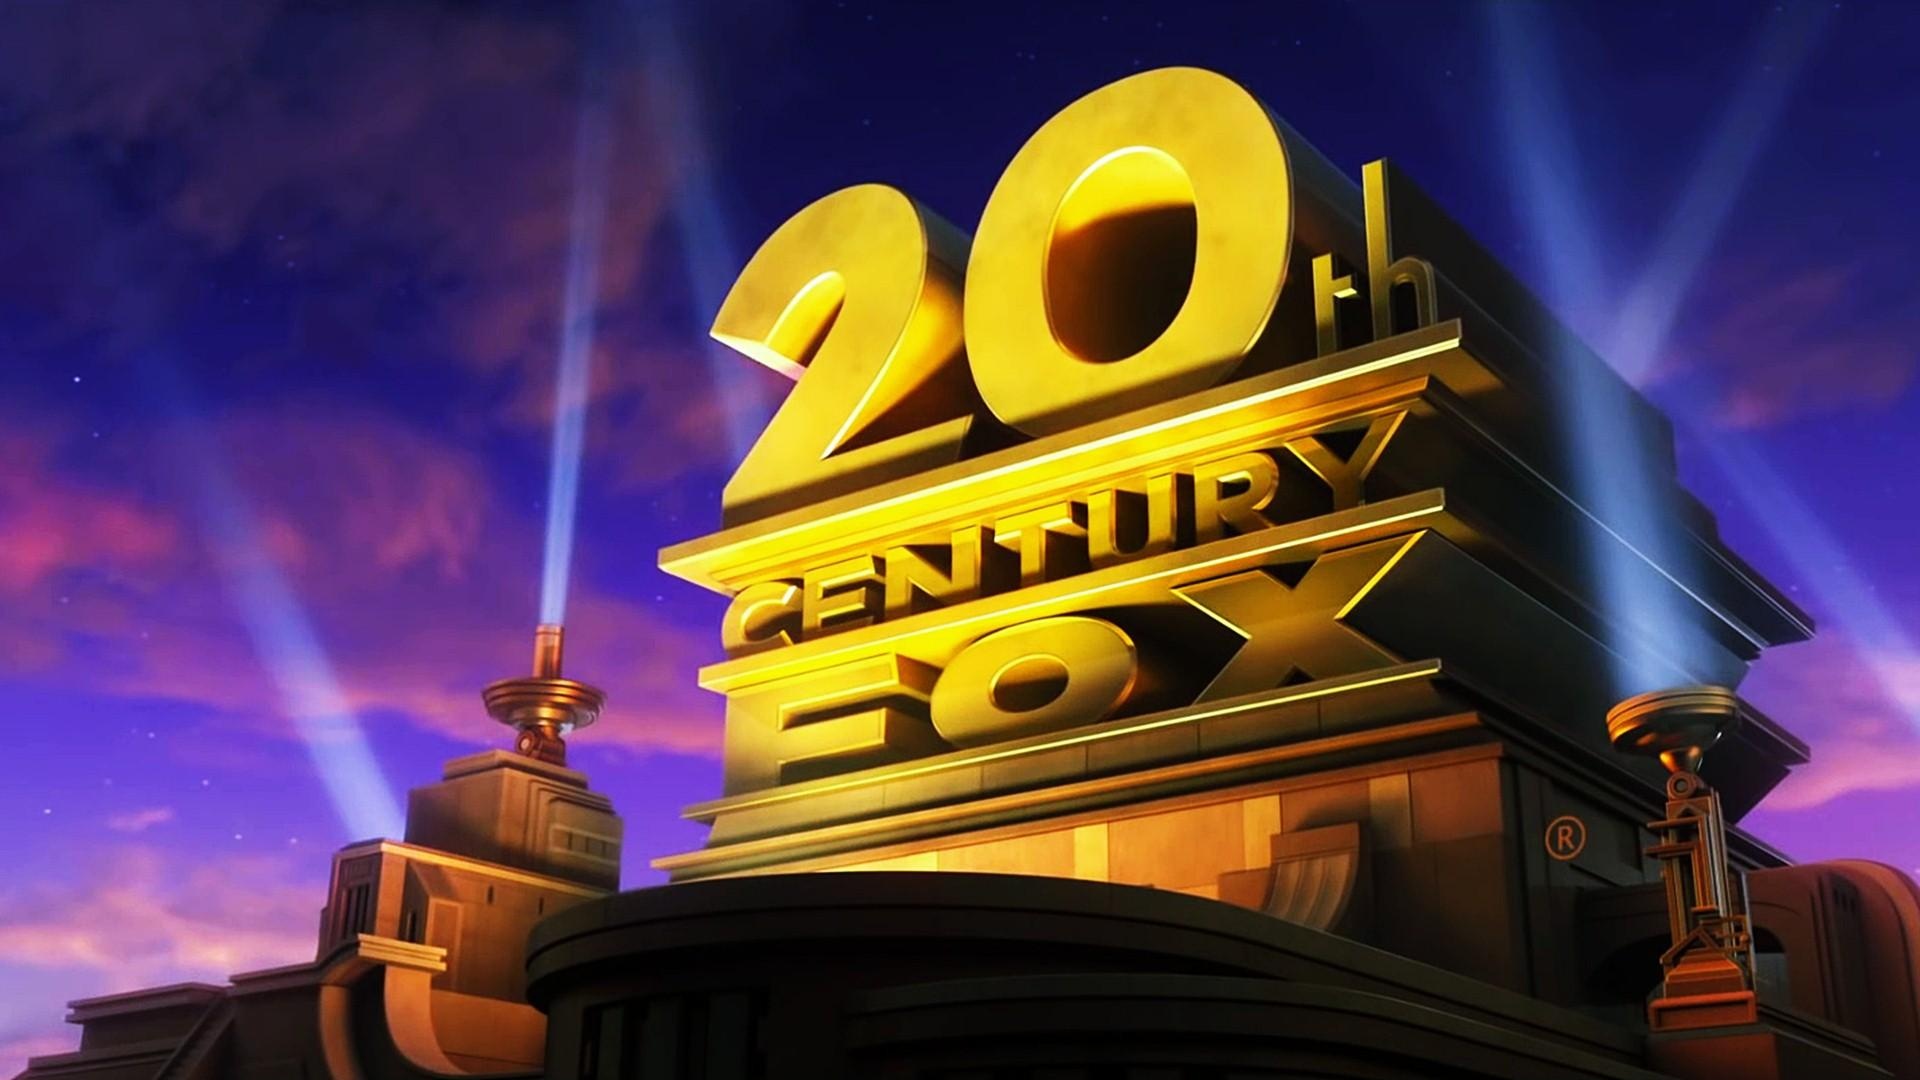 20th Century Fox, Movie studio, Iconic logo, Film history, 1920x1080 Full HD Desktop